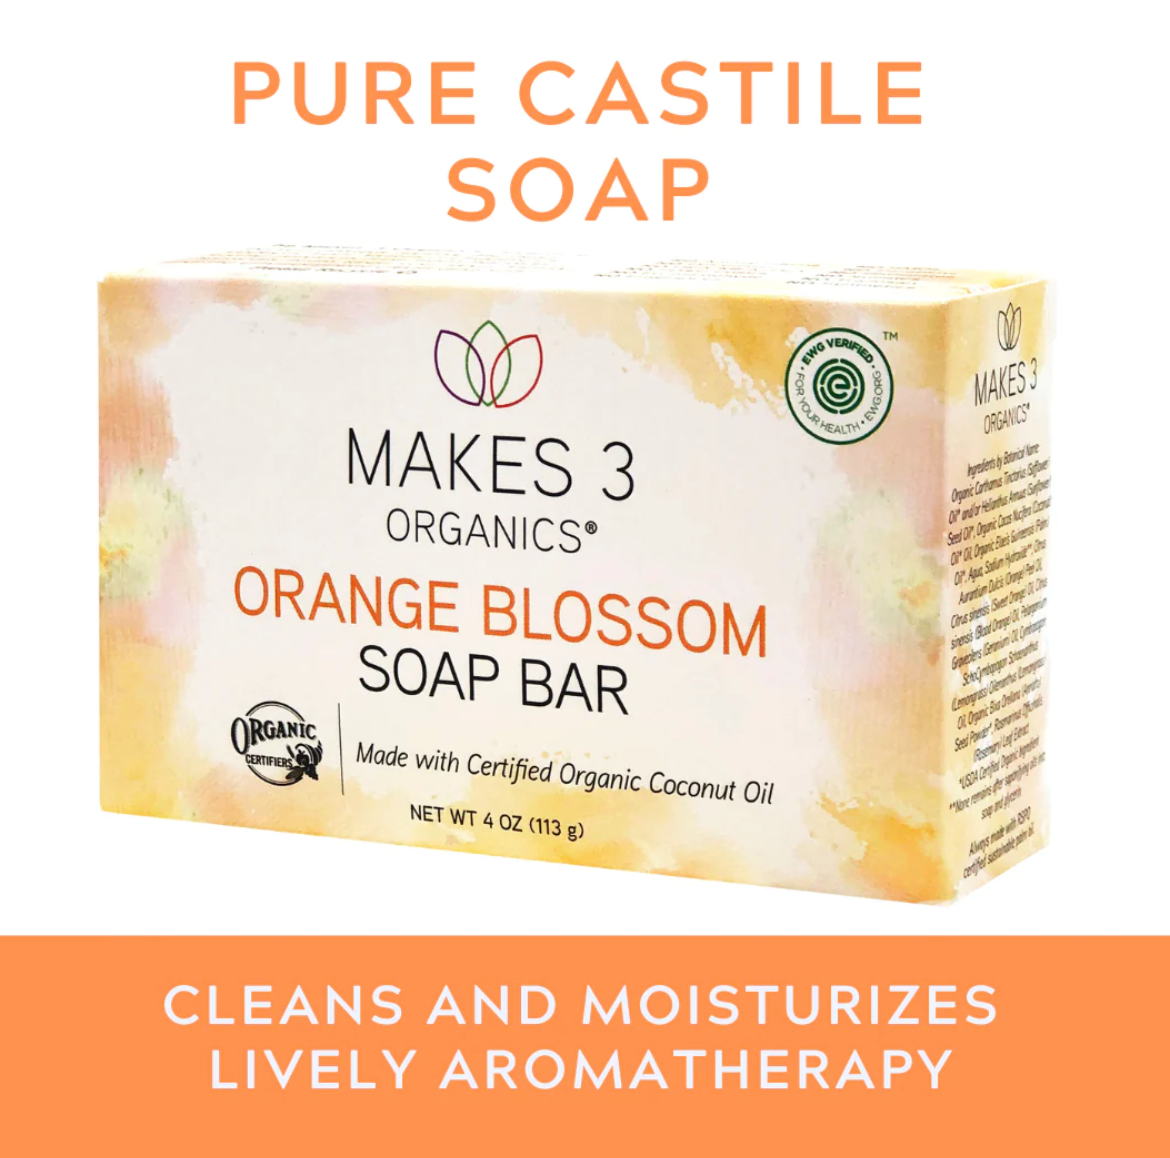 Makes 3 Organics Orange Blossom Organic Soap Bar